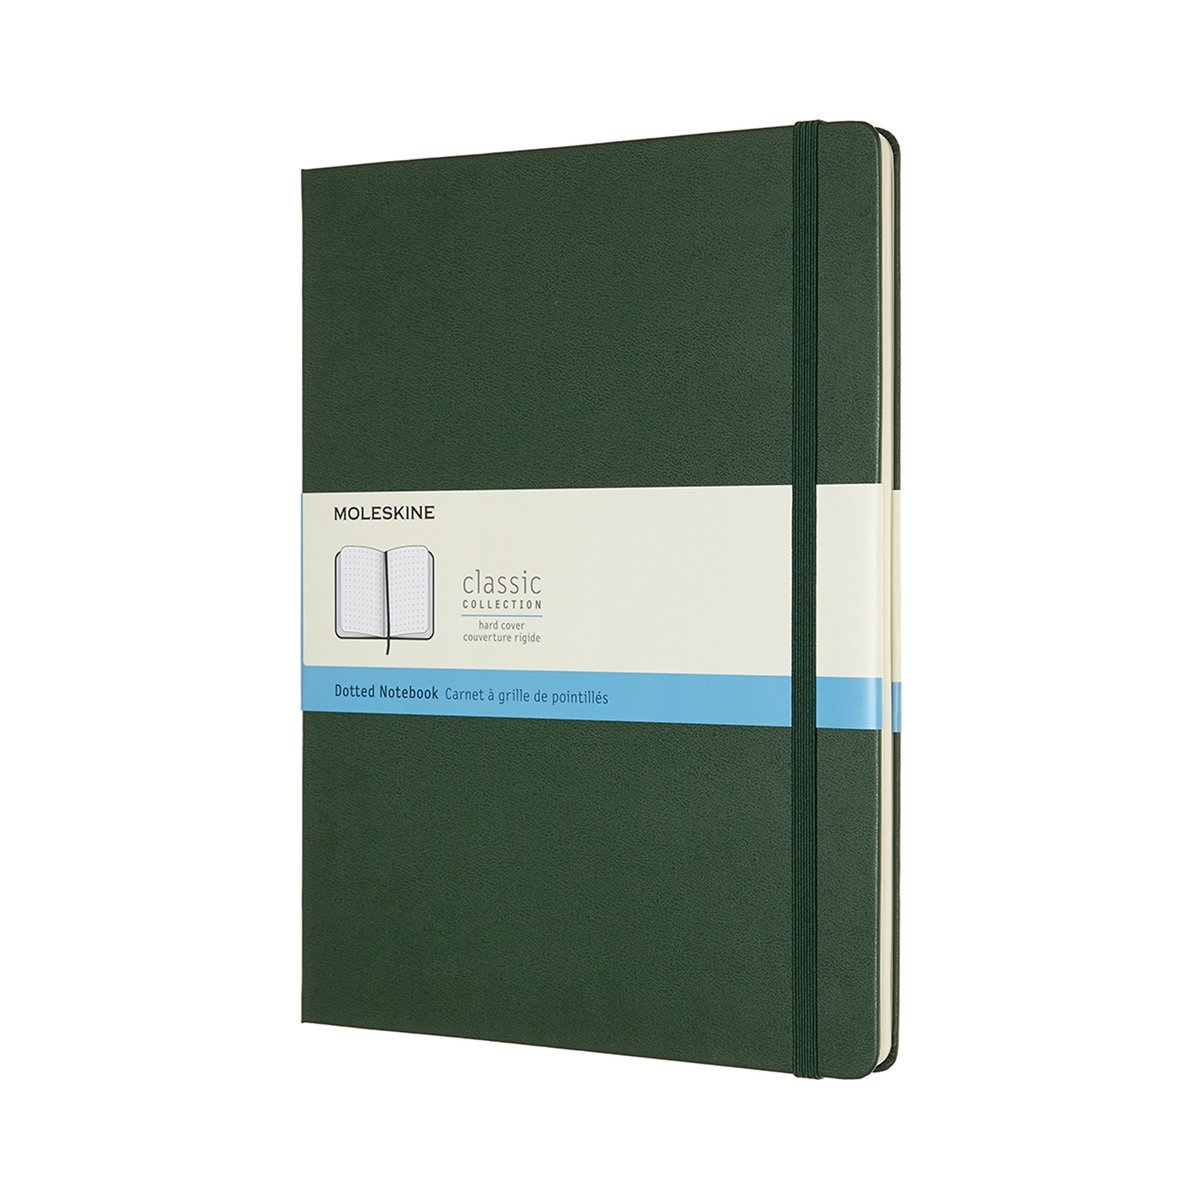 Moleskine Classic – Notitieboek – Bullet Journal – Extra Large – 19x25cm – Hardcover – Gestippeld – Dotted – Mirte Groen